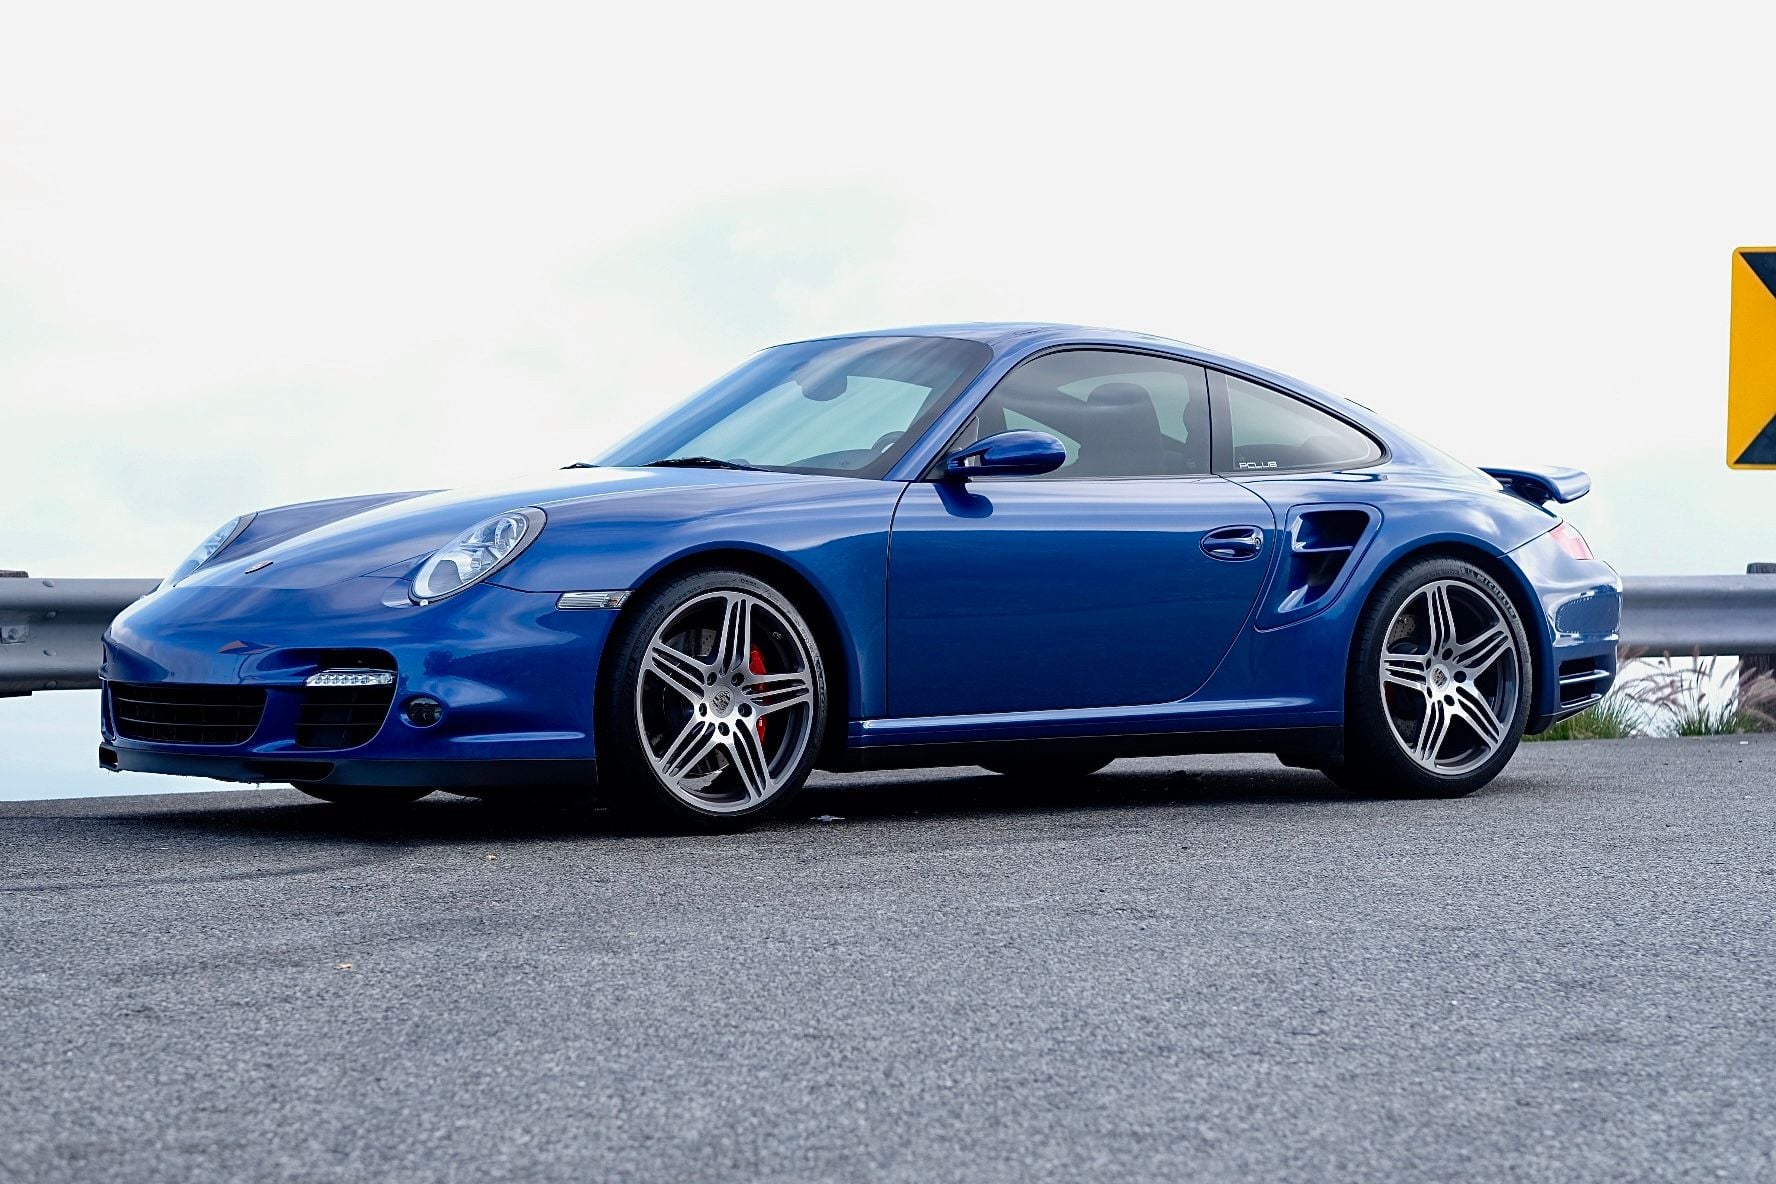 2007 Porsche 911 - 2007 Porsche 911 Turbo Coupe 6-speed - Cobalt Blue - Used - Los Angeles, CA 90275, United States